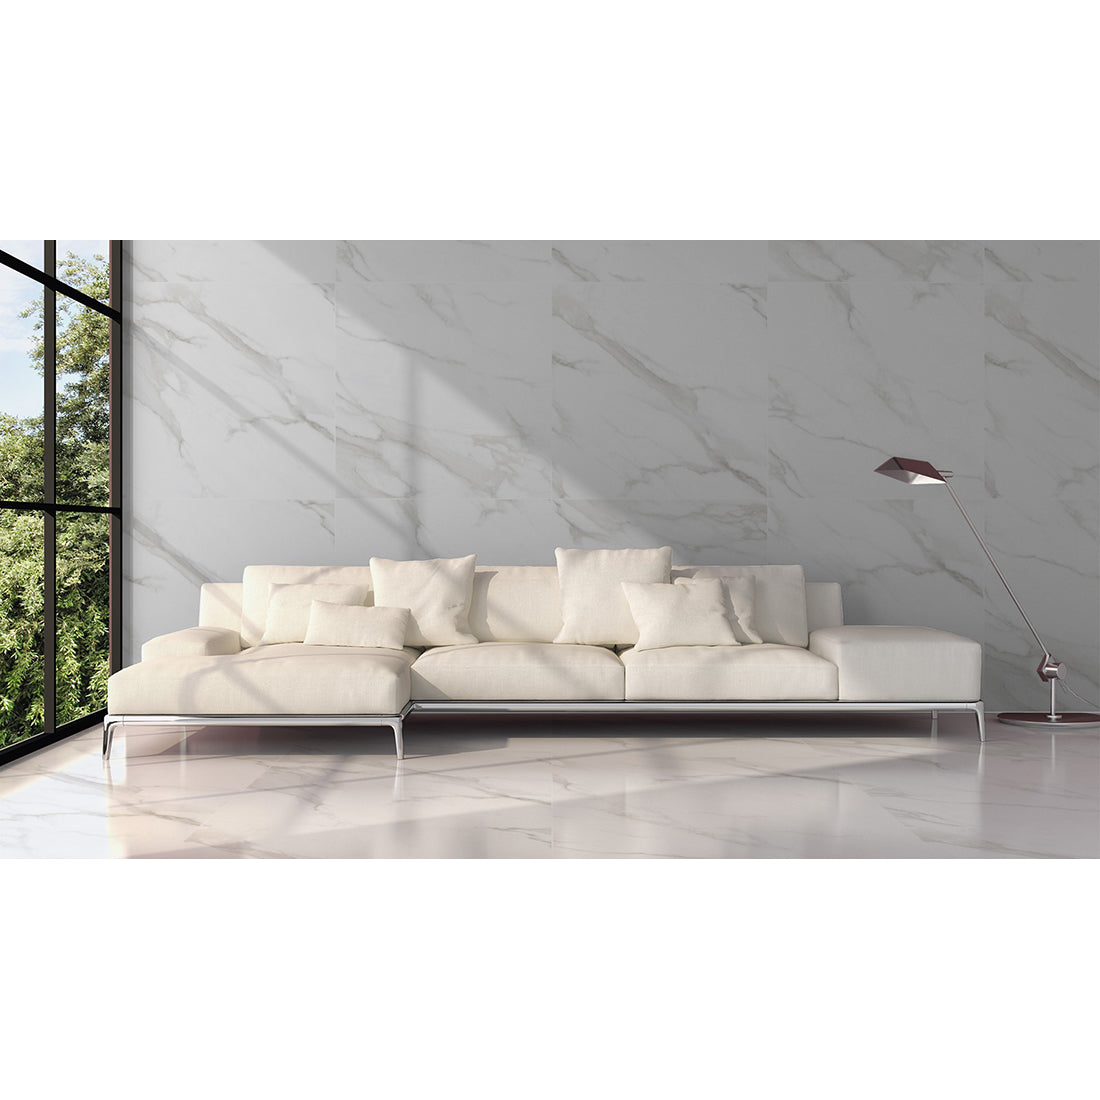 Job Lot Deal: 55 Tiles (35 sq.m) Statuario Mercury Grey Marble Effect Polished 80x80cm Porcelain Wall & Floor Tile